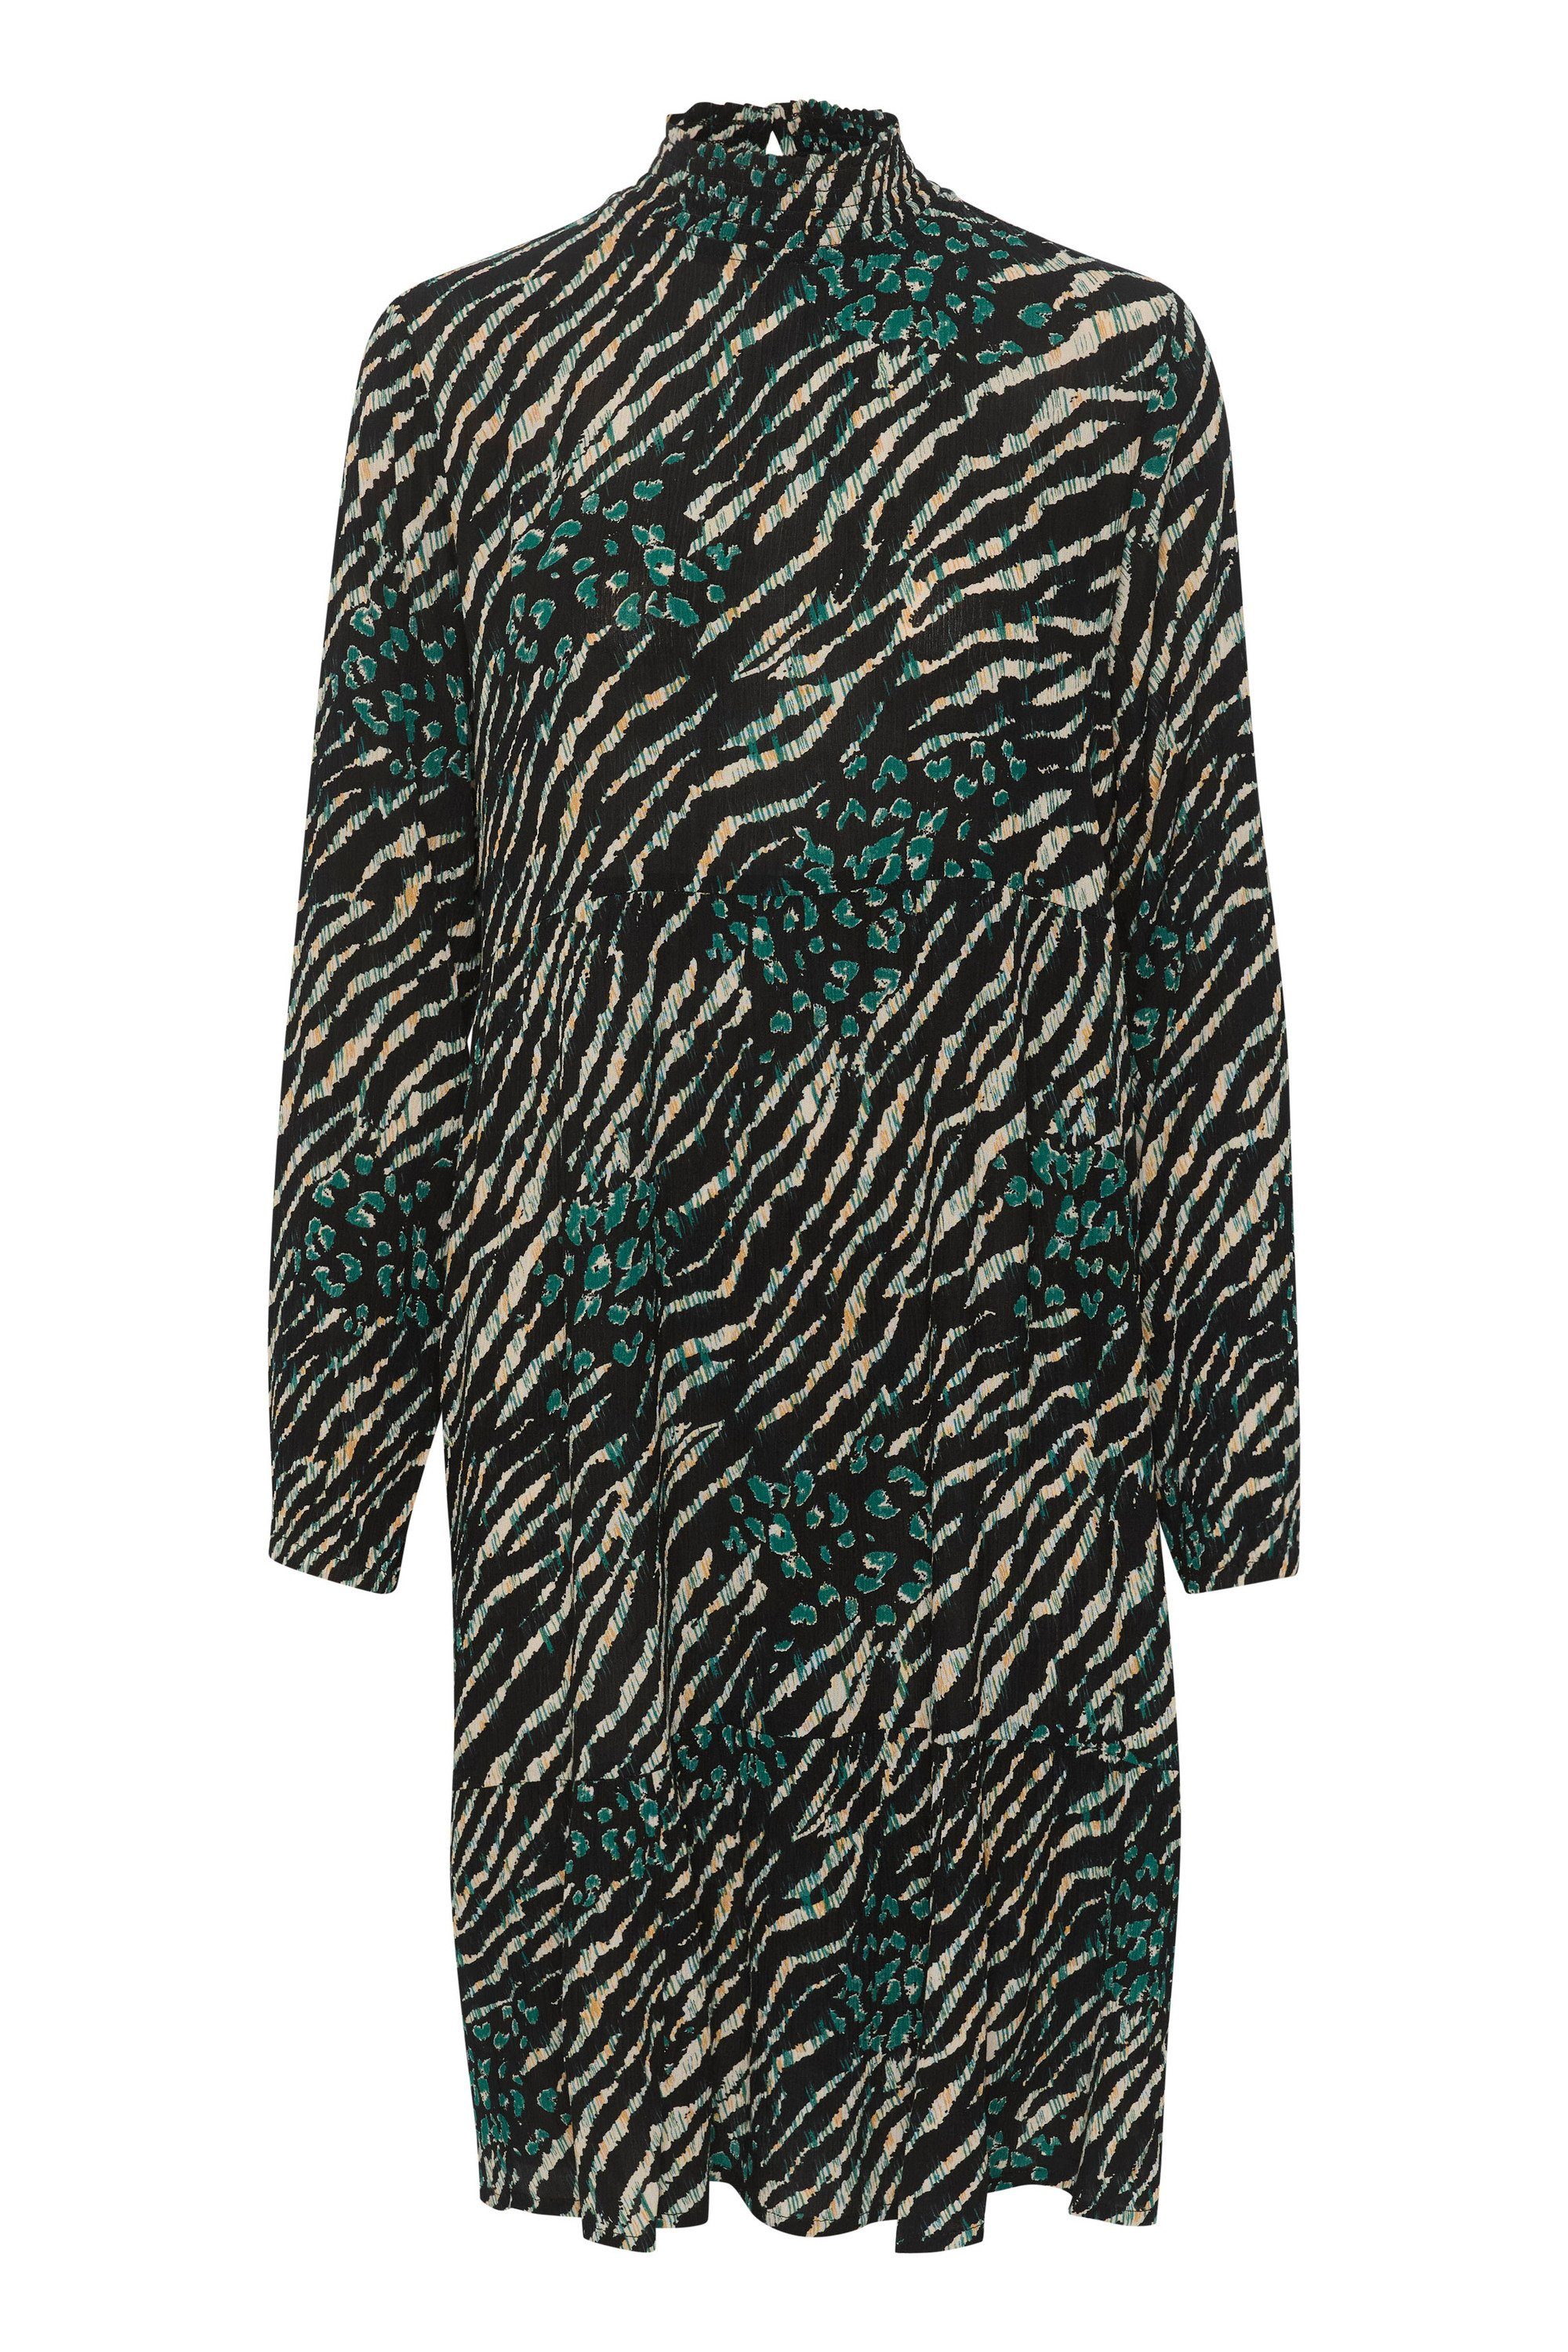 KAFFE Jerseykleid Kleid KAamber Black / Green Animal Print